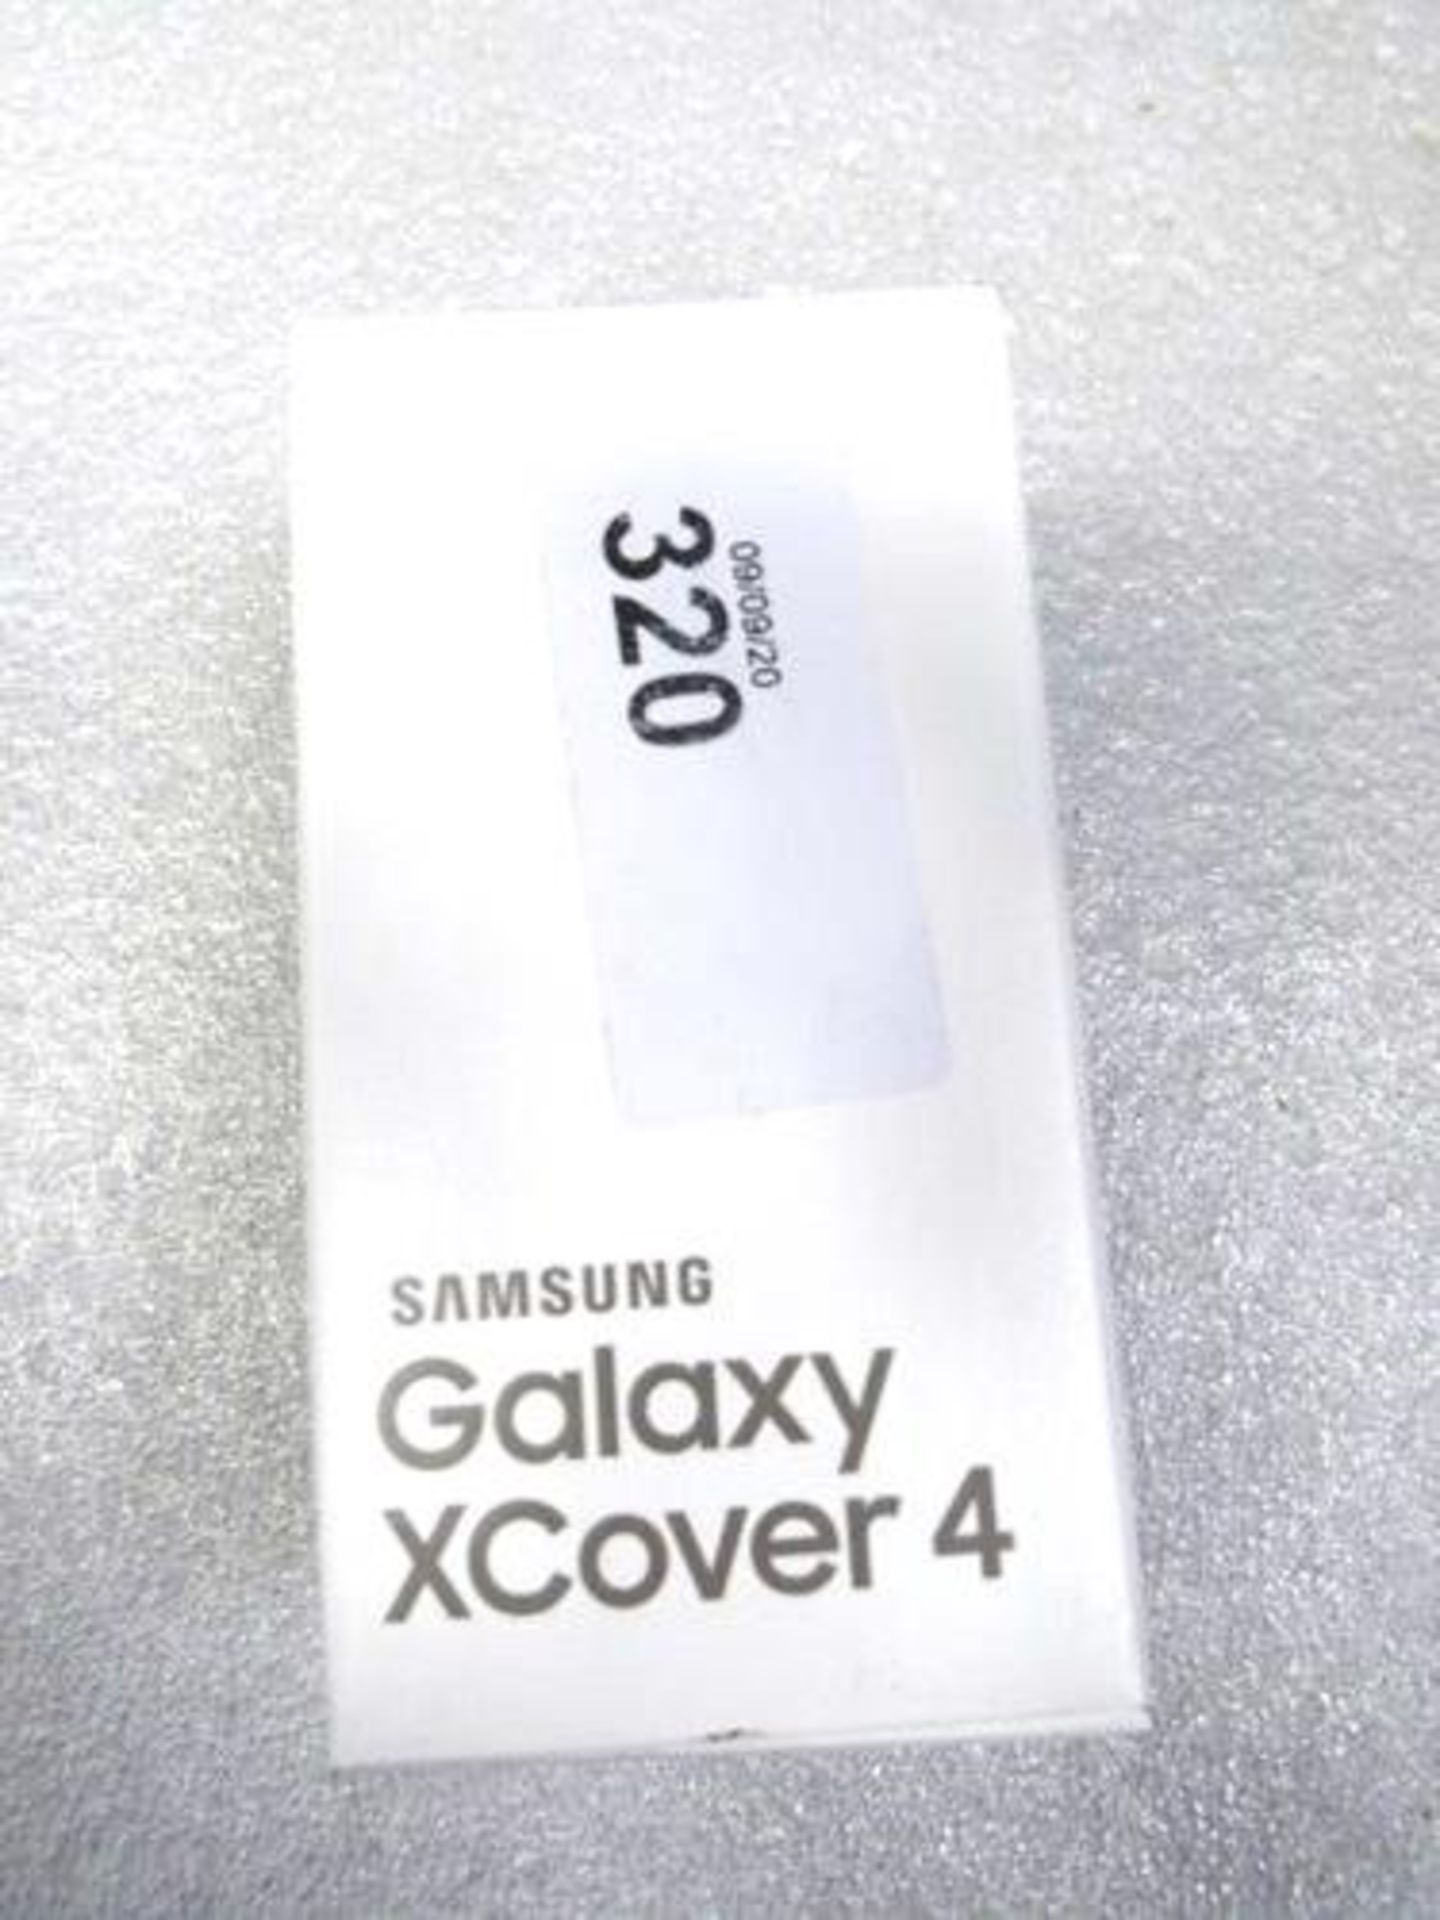 Samsung 16gb Galaxy XCover 4 black smart phone, model SM-G390F, IMEI: 355215/10 560231/7 -